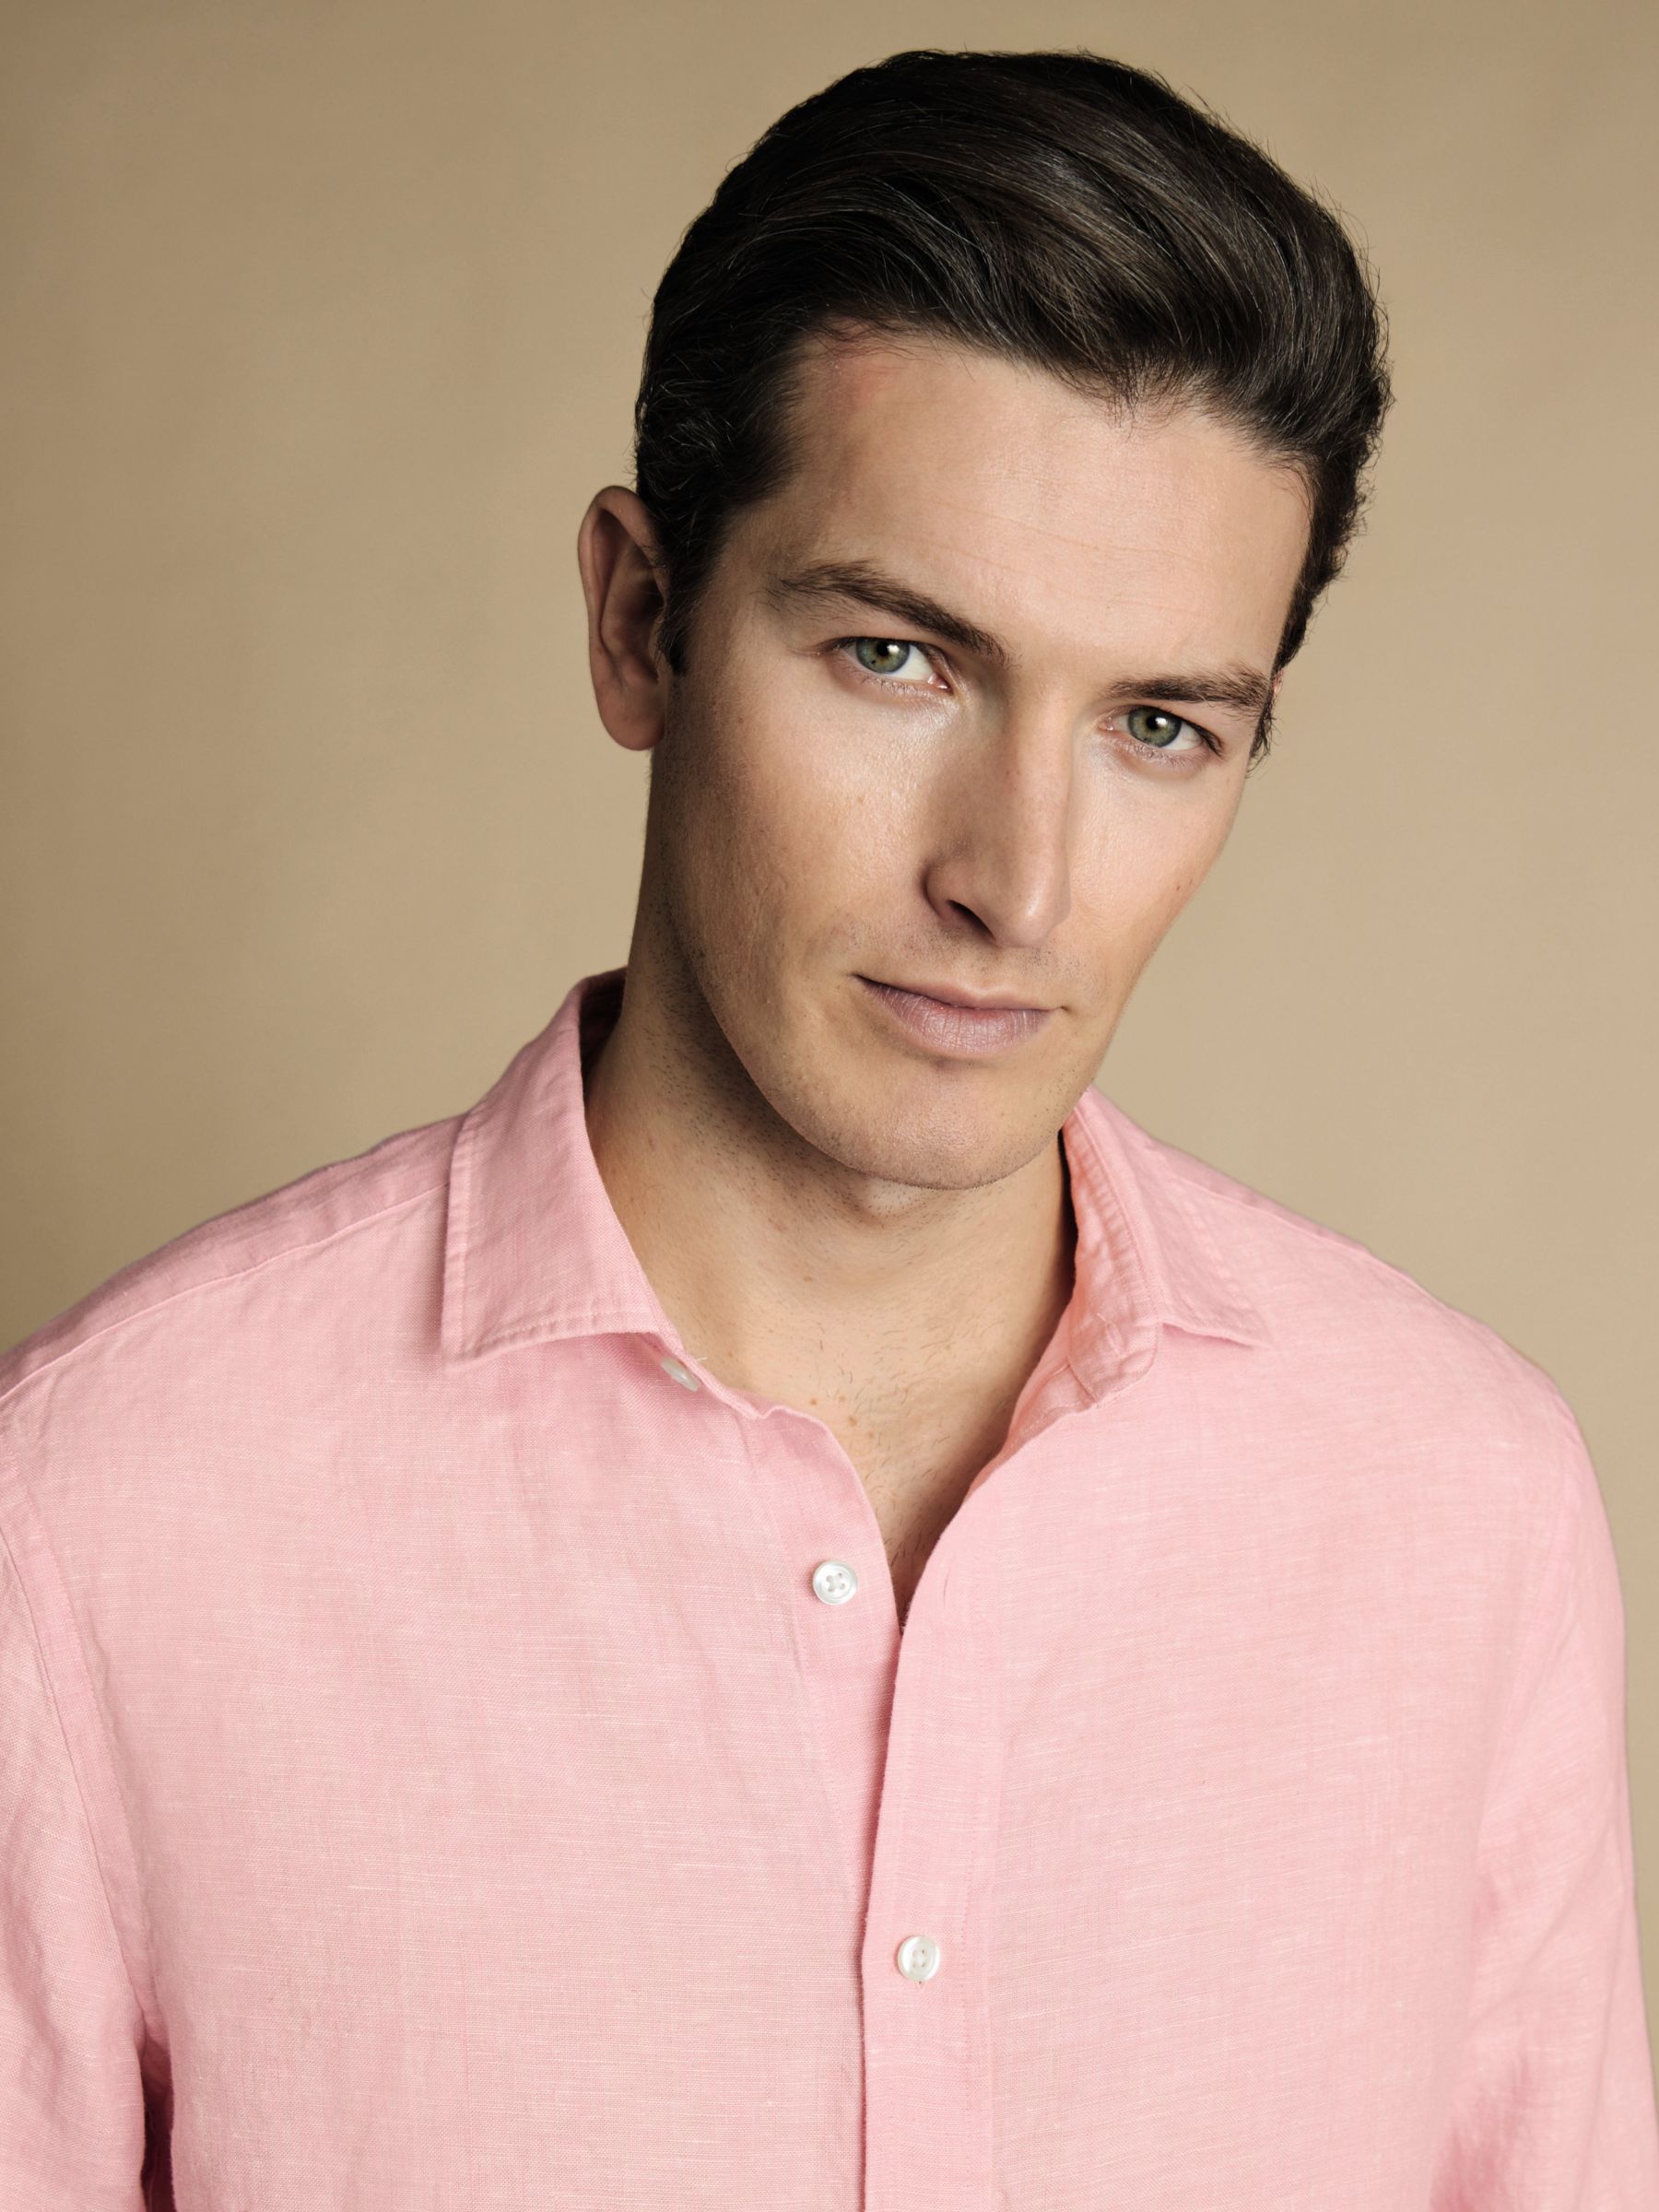 Charles Tyrwhitt Slim Fit Linen Shirt, Pink, S